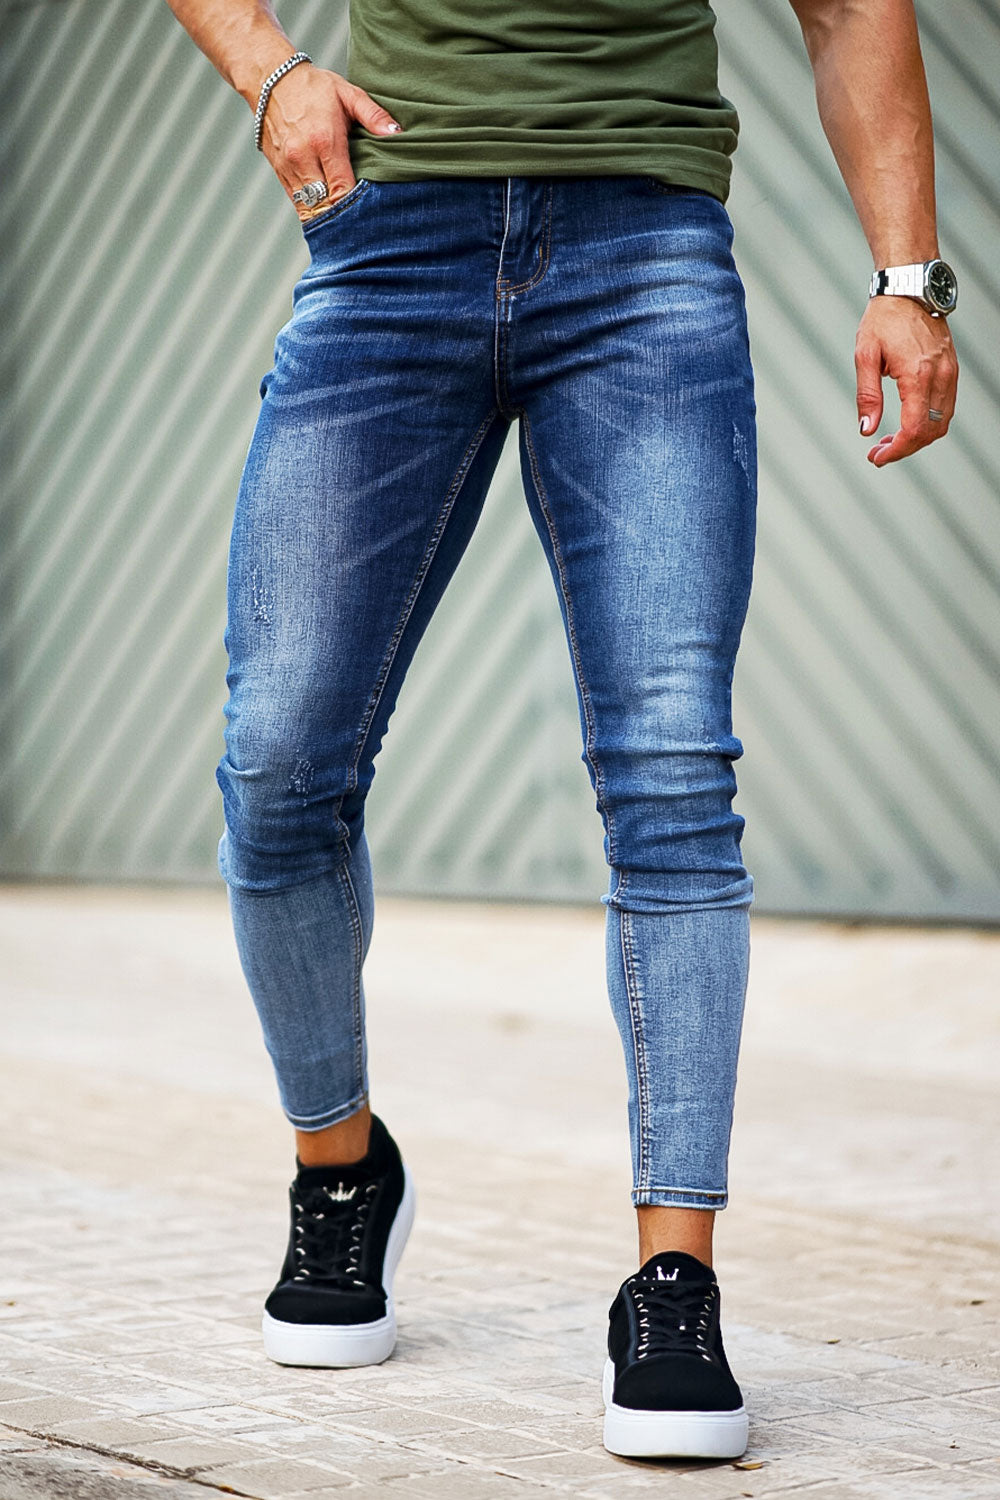 stylish skinny jeans - blue